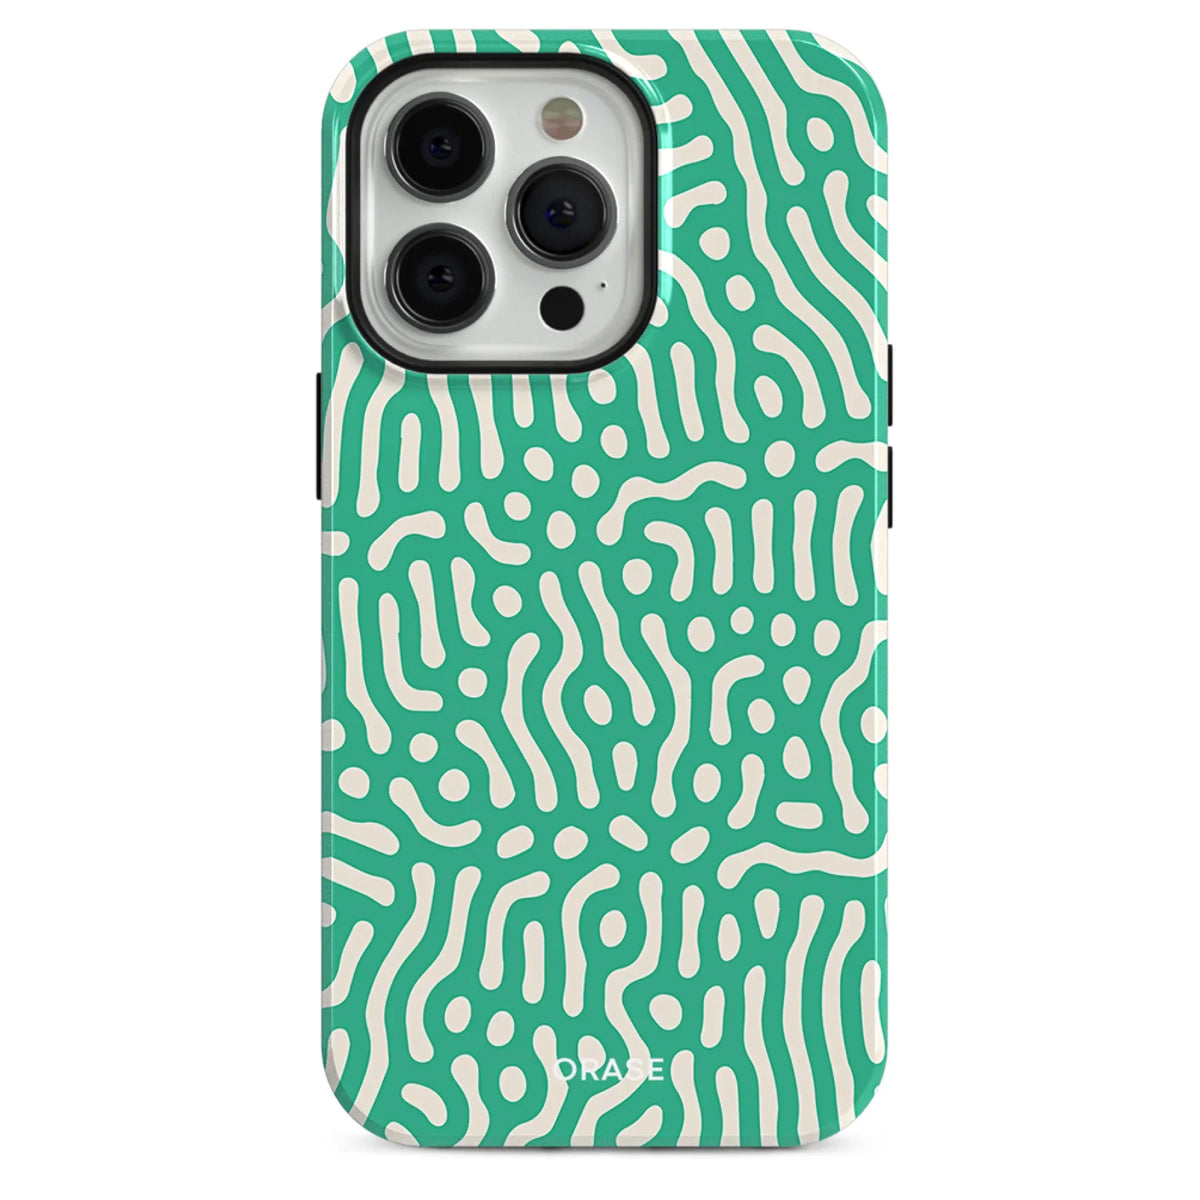 Lune Green iPhone Case - iPhone 12